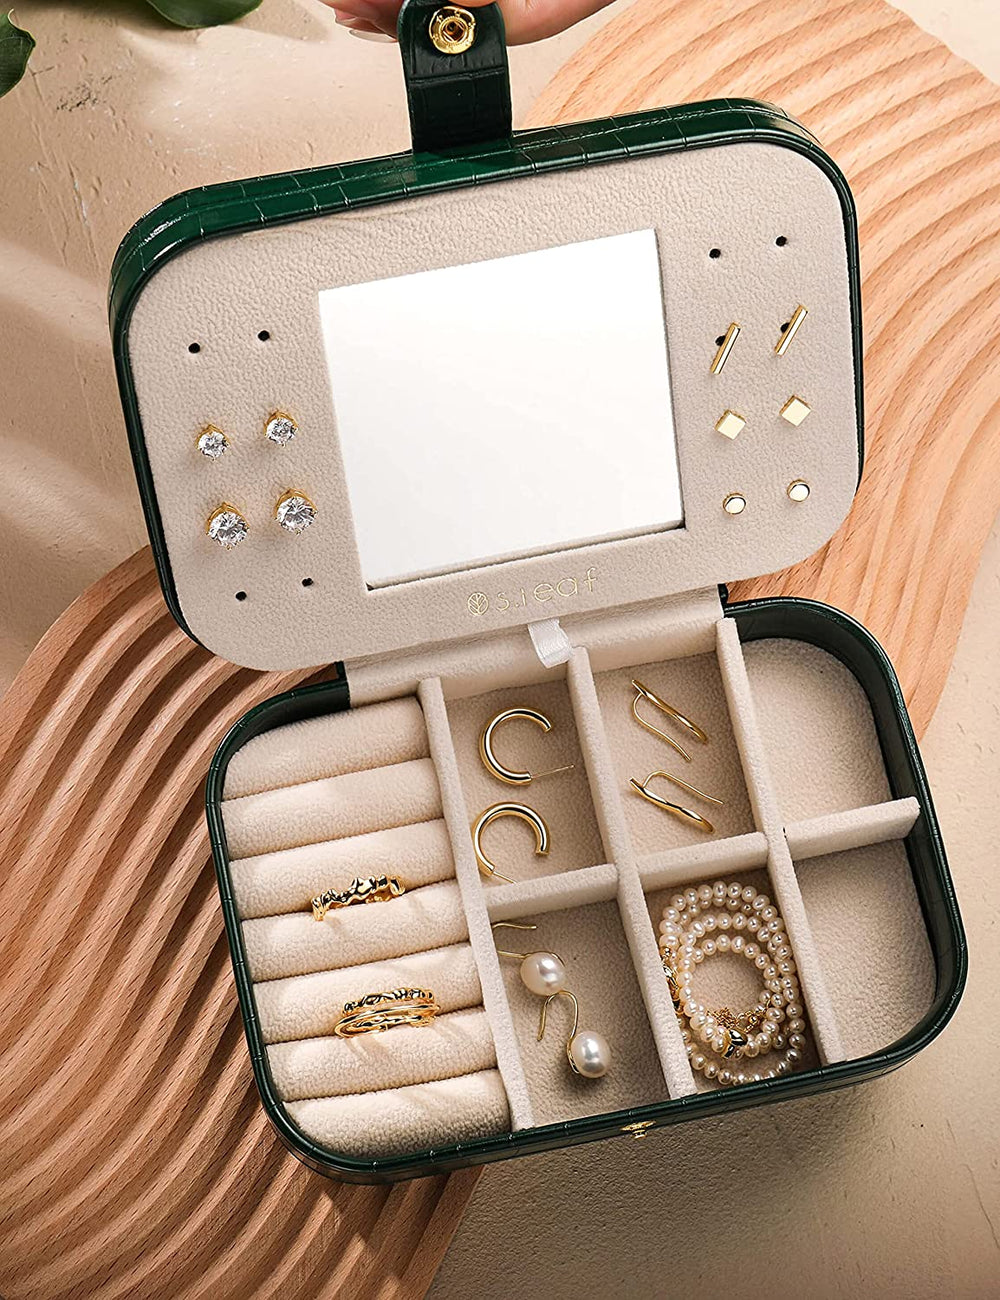 PU leather travel jewelry box